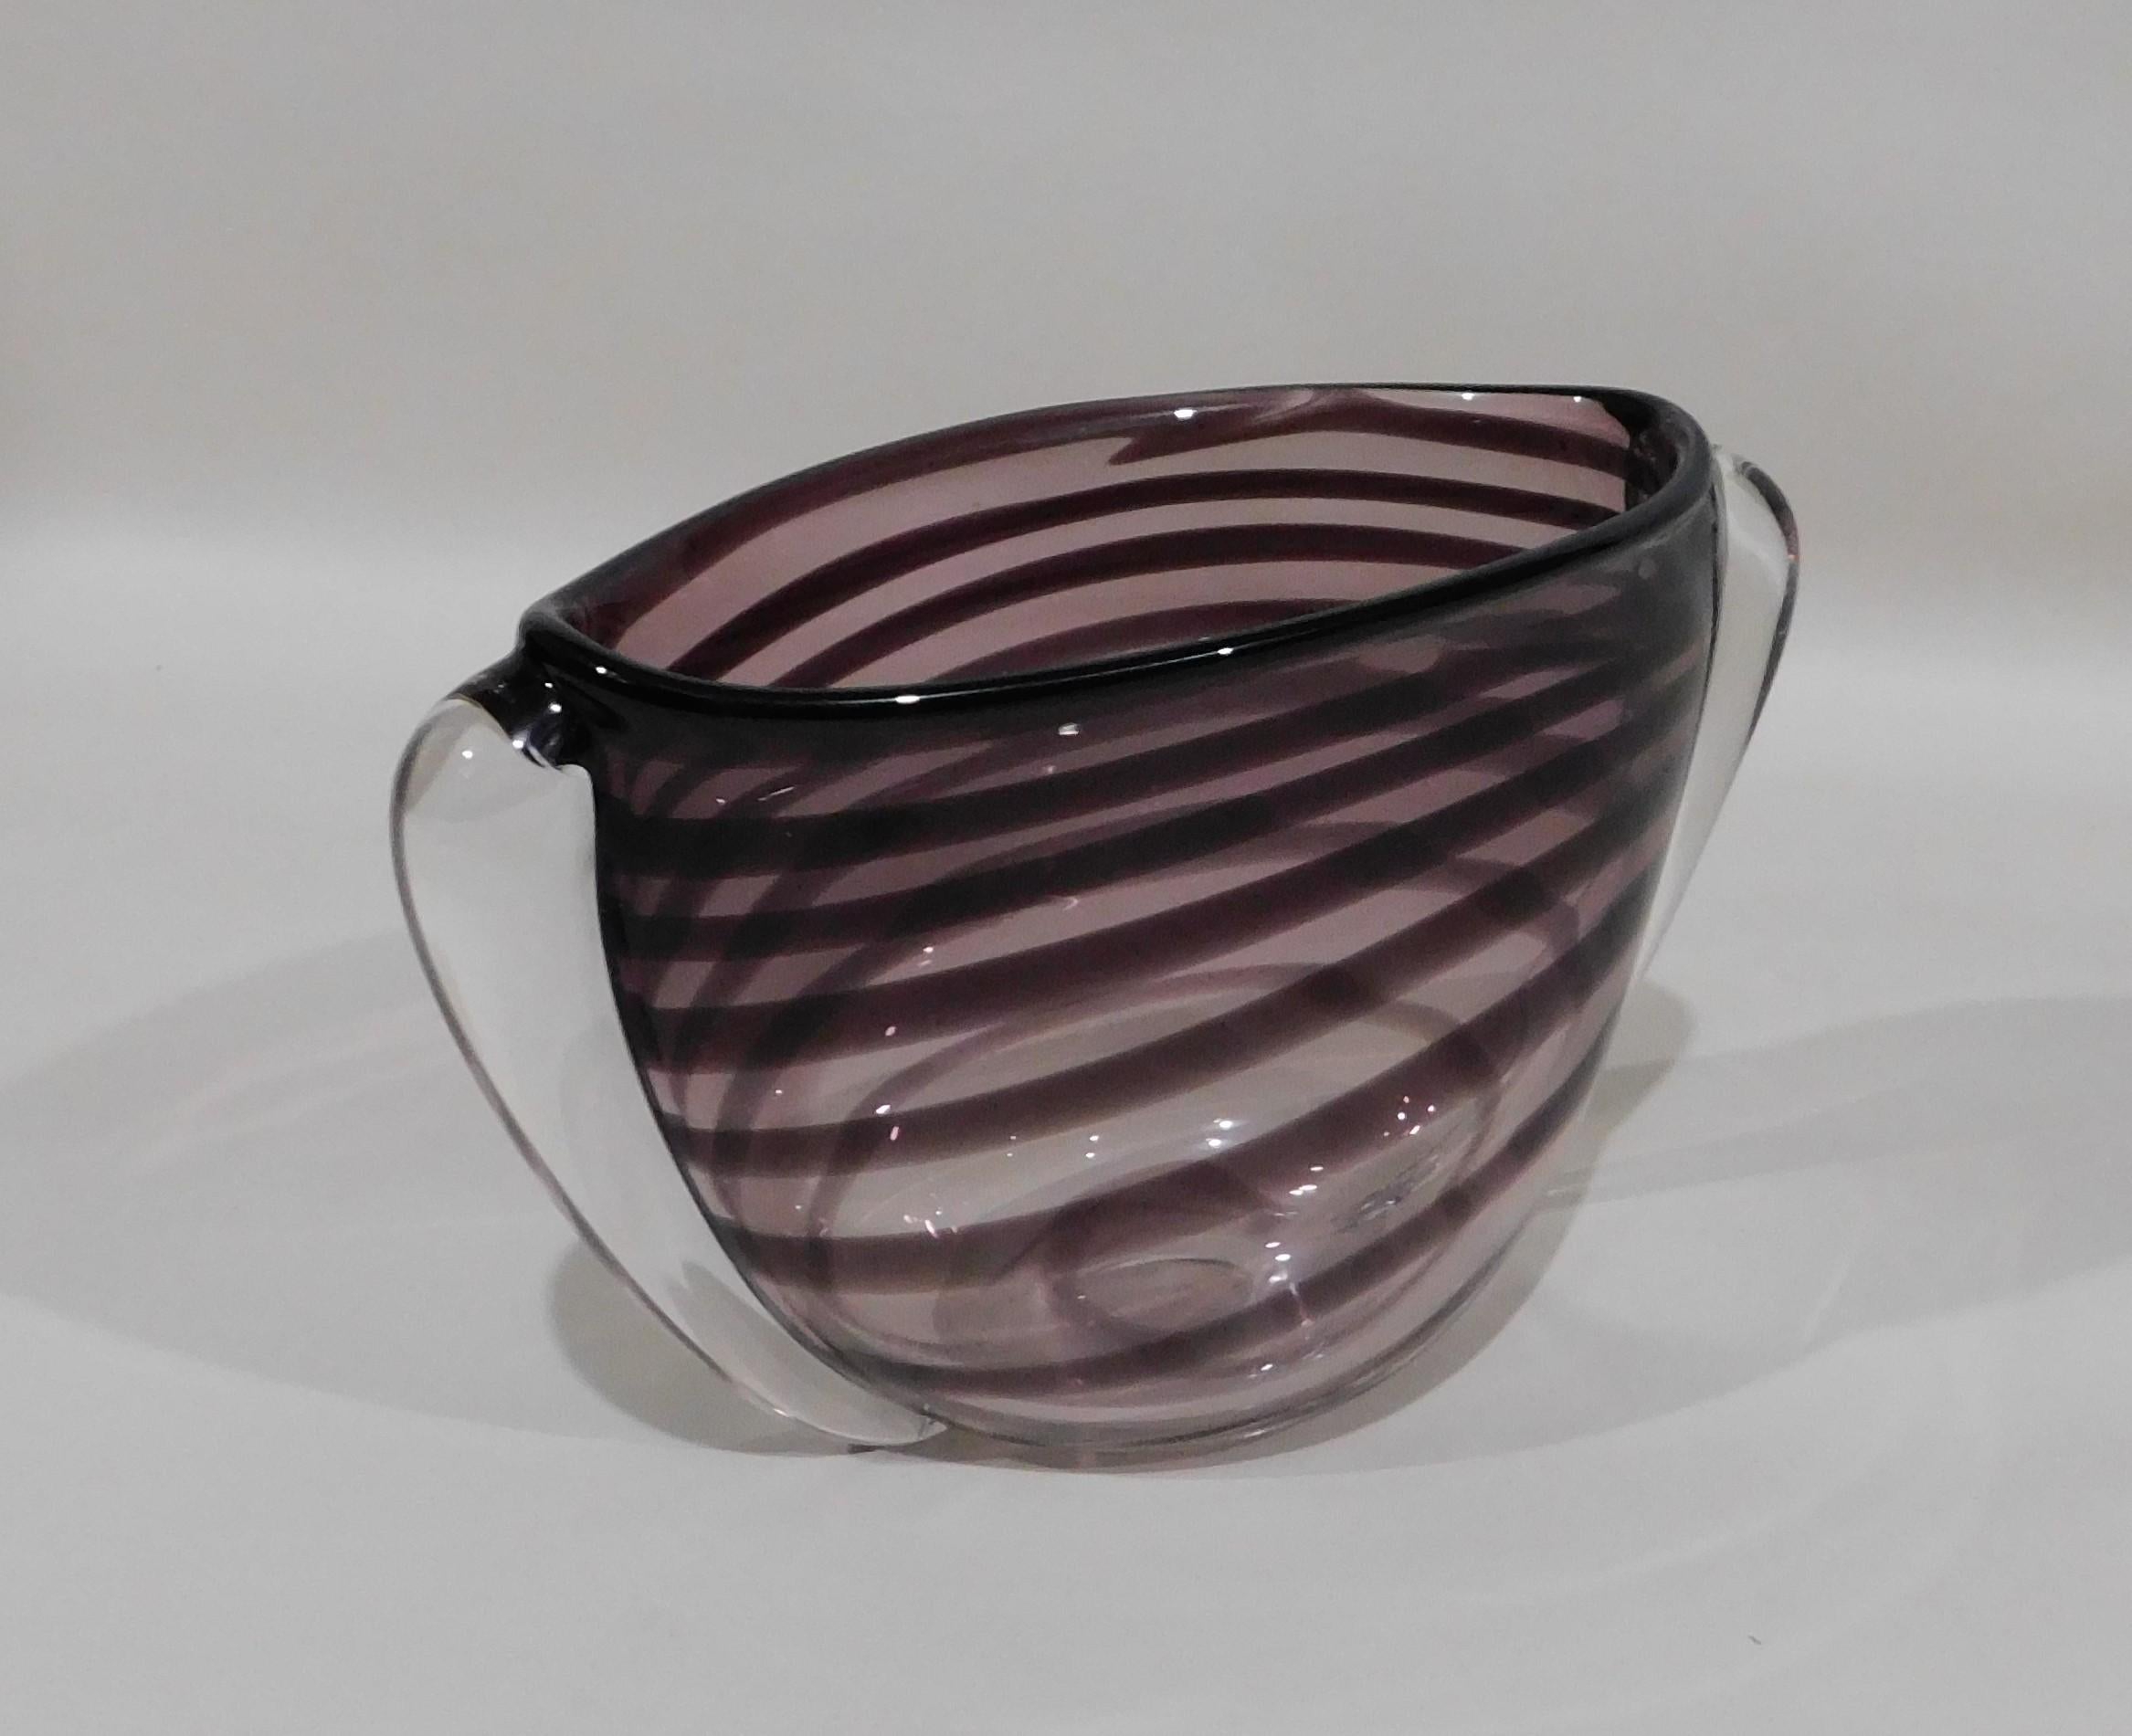 Royal Dutch Leerdam Art Glass Vase Unica Floris Meydam Design 1